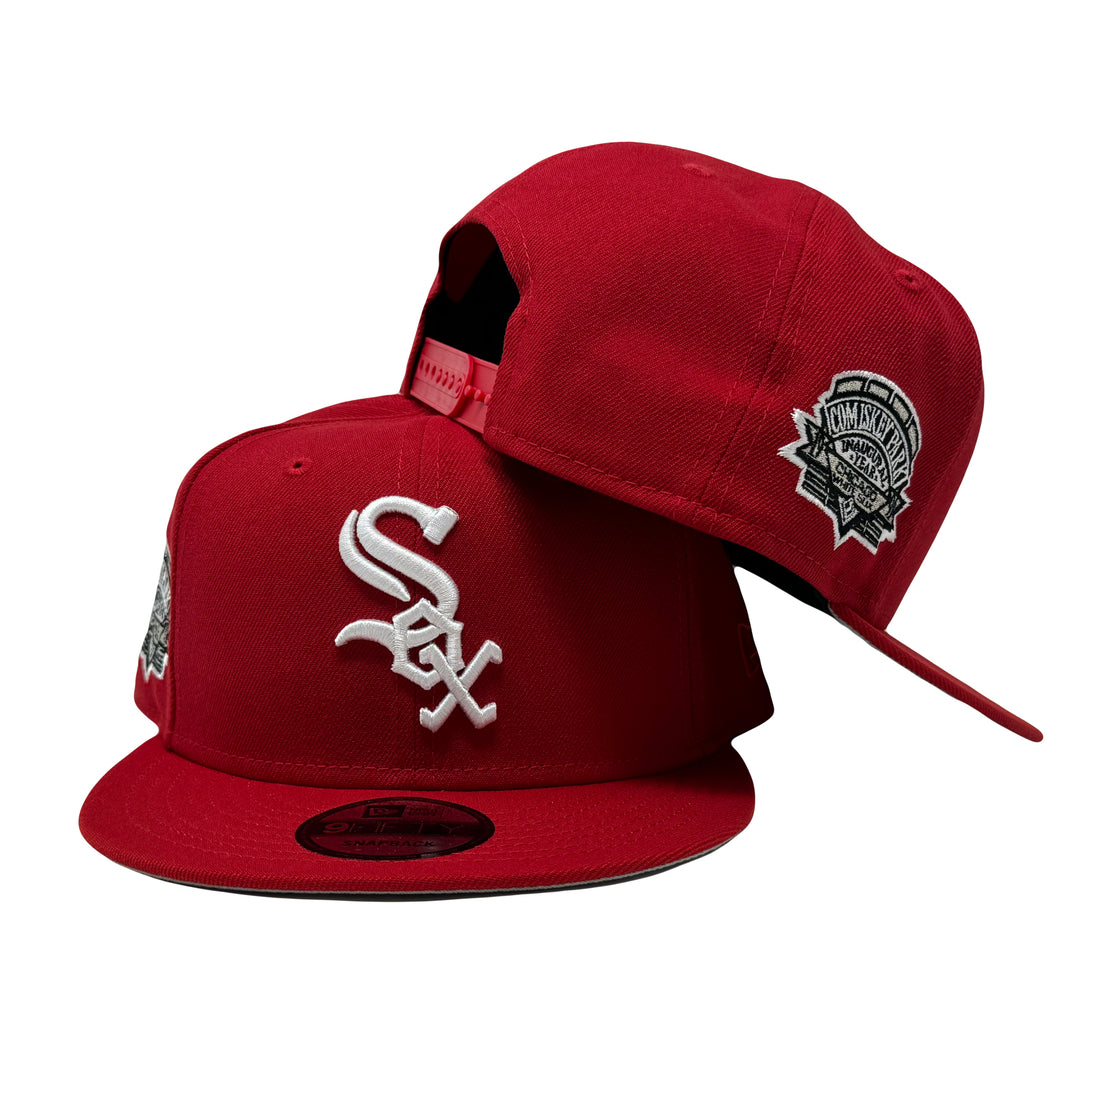 Chicago White Sox Comiskey Park Red New Era Snapback Hat